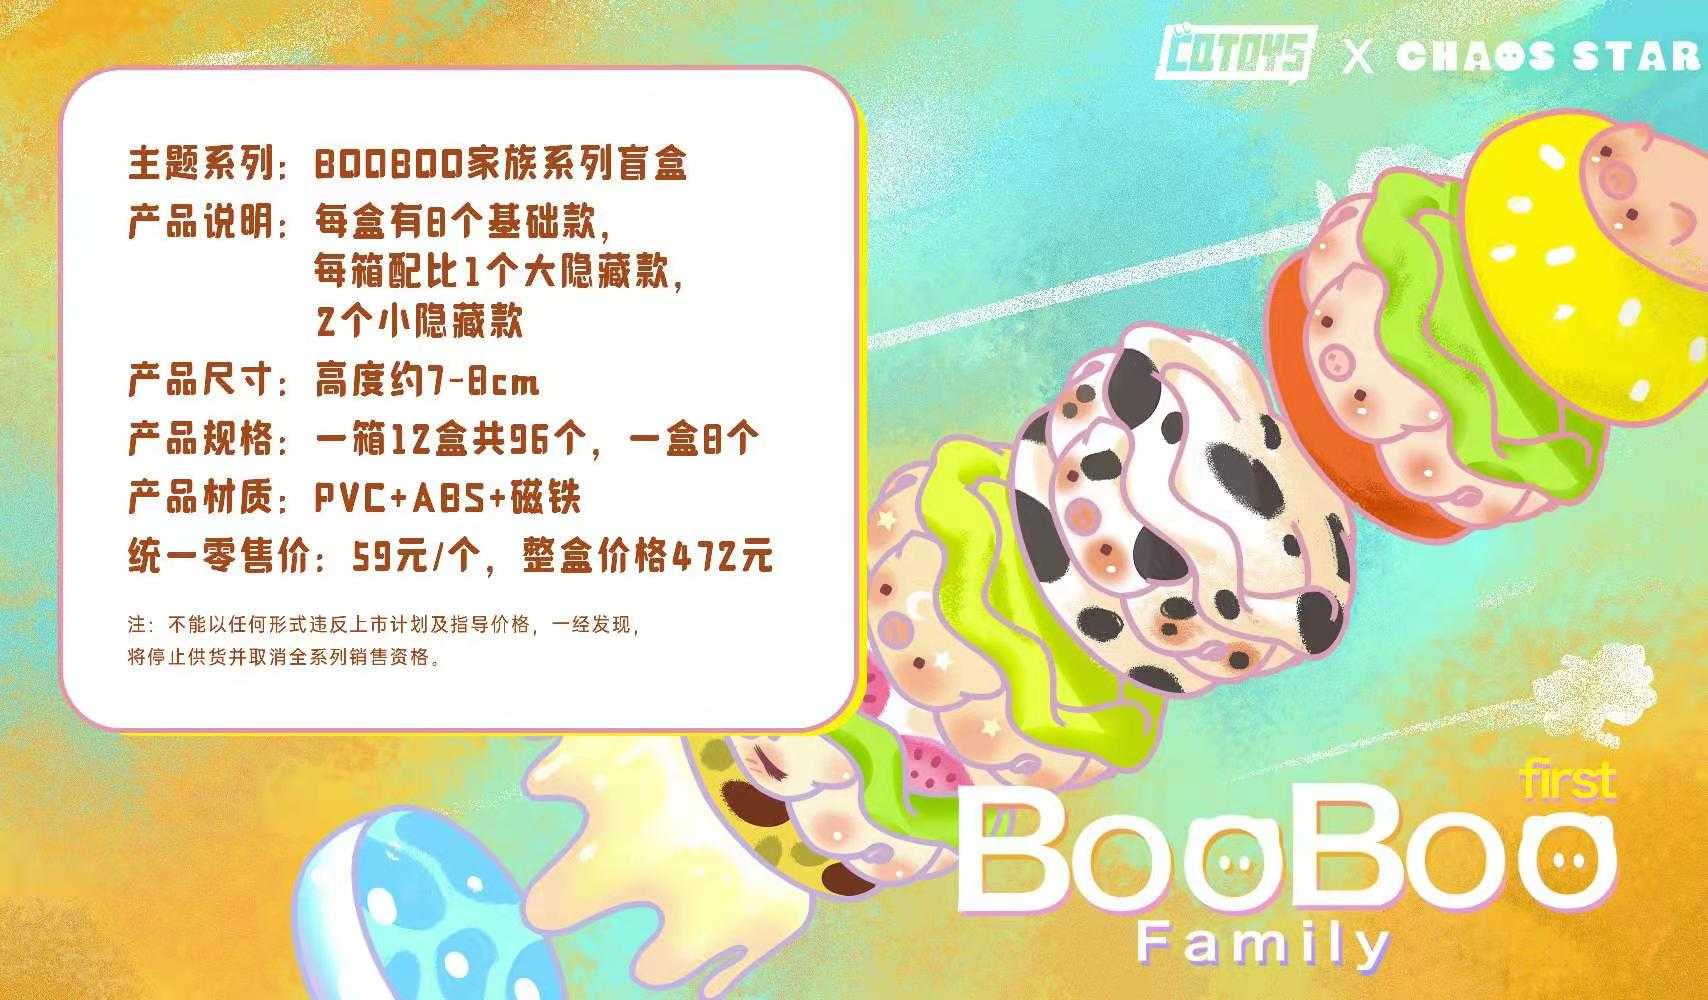 【Lemonade】現貨-BooBoo漢堡豬家族系列盲盒 盒玩 盲抽 公仔 玩具 COTOYS X CHAOS STAR